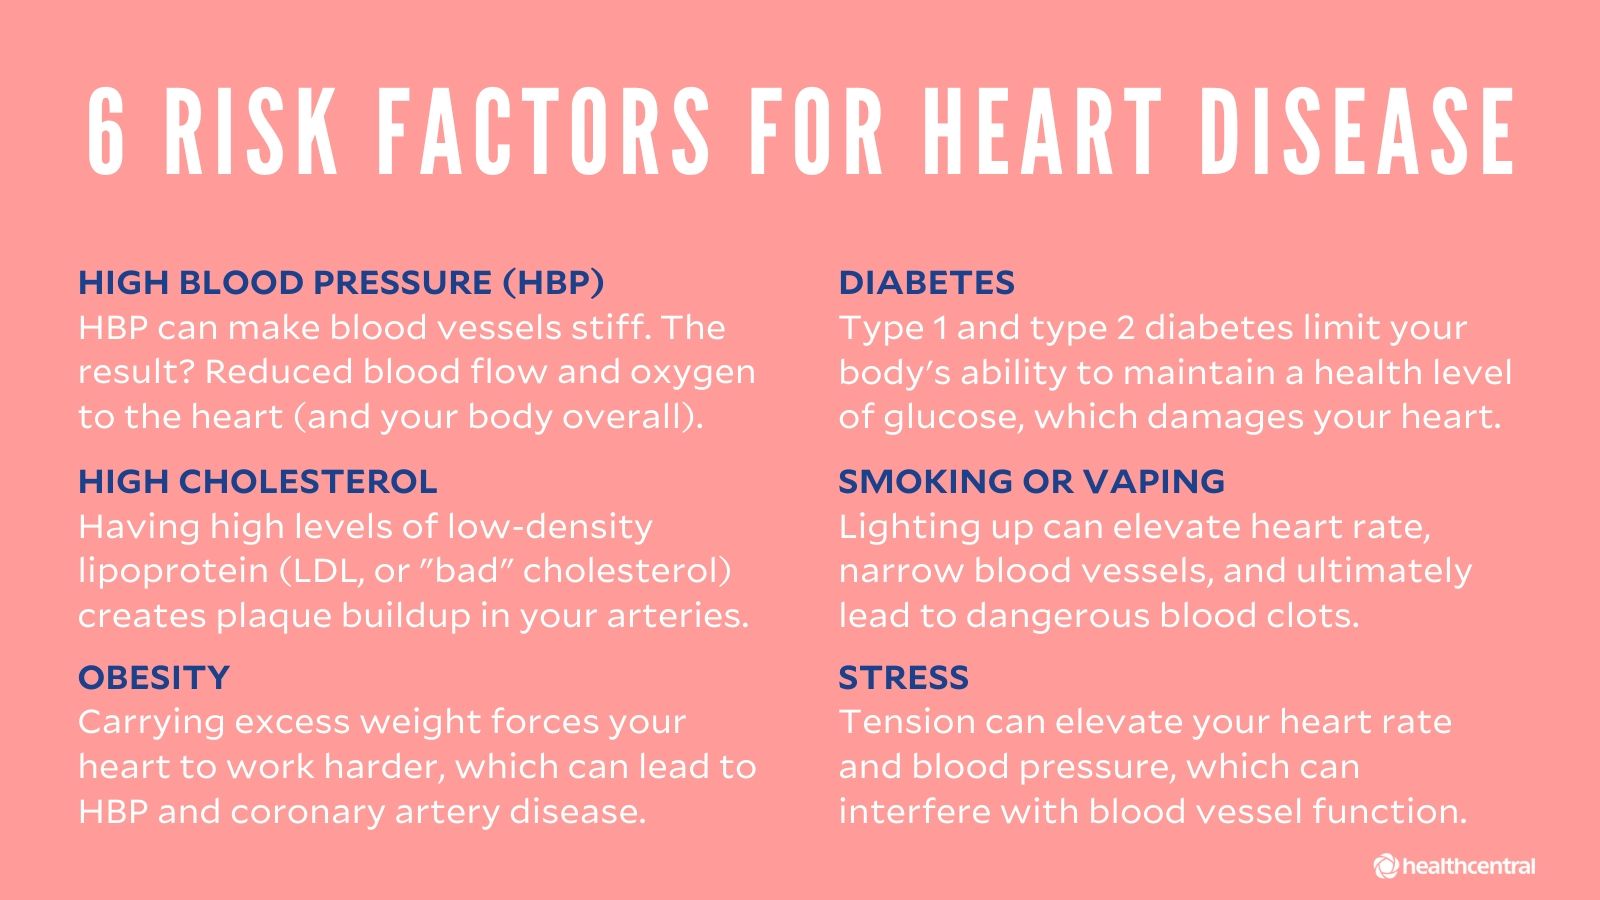 diabetes higher heart rate